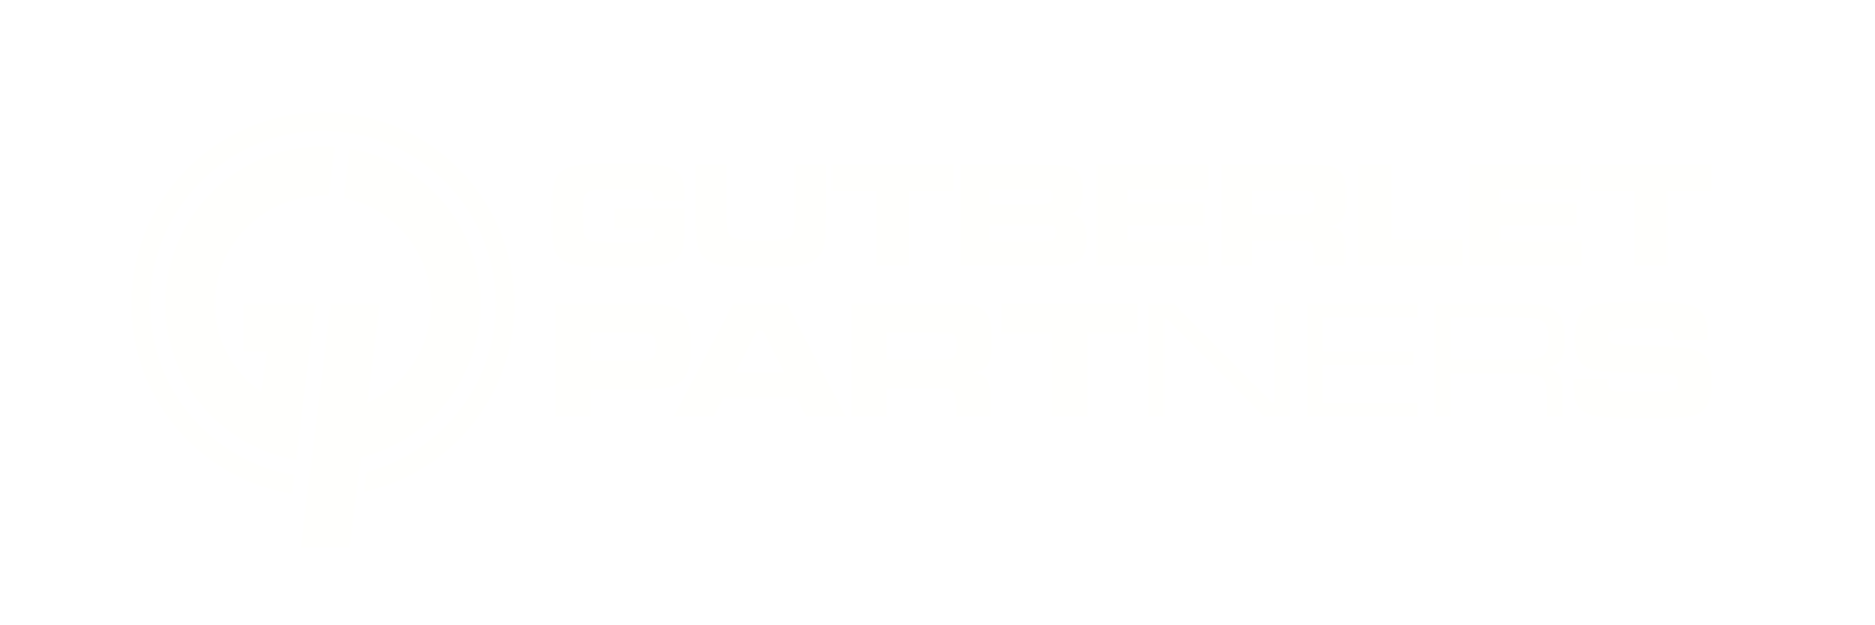 GutberletPartners_Logo_